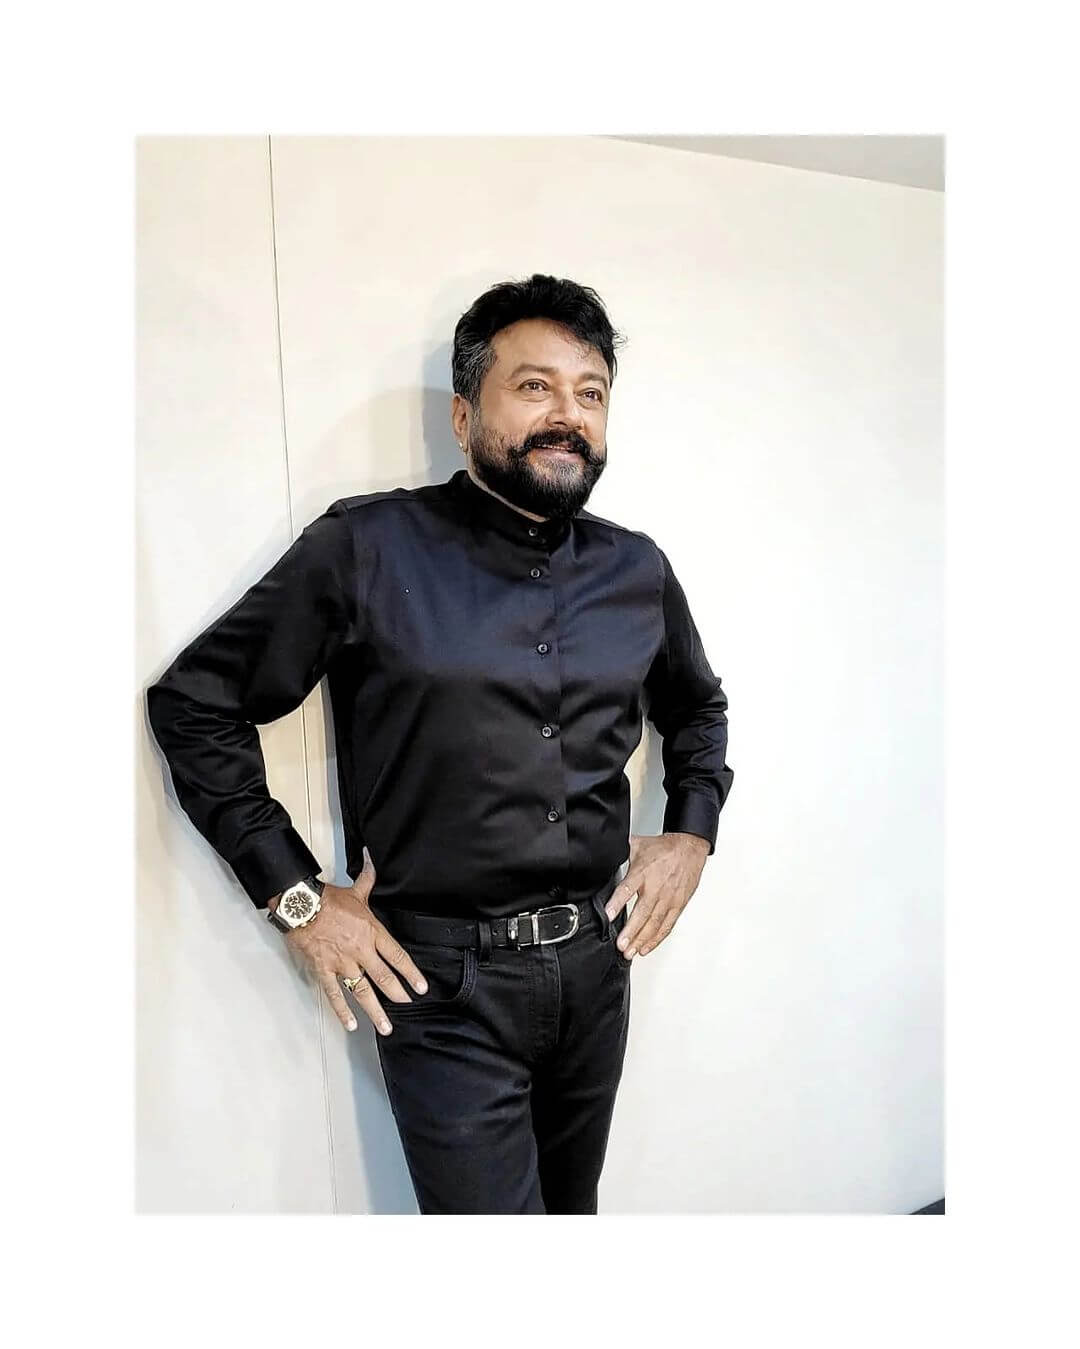 Actor Jayaram in stylish black outfit